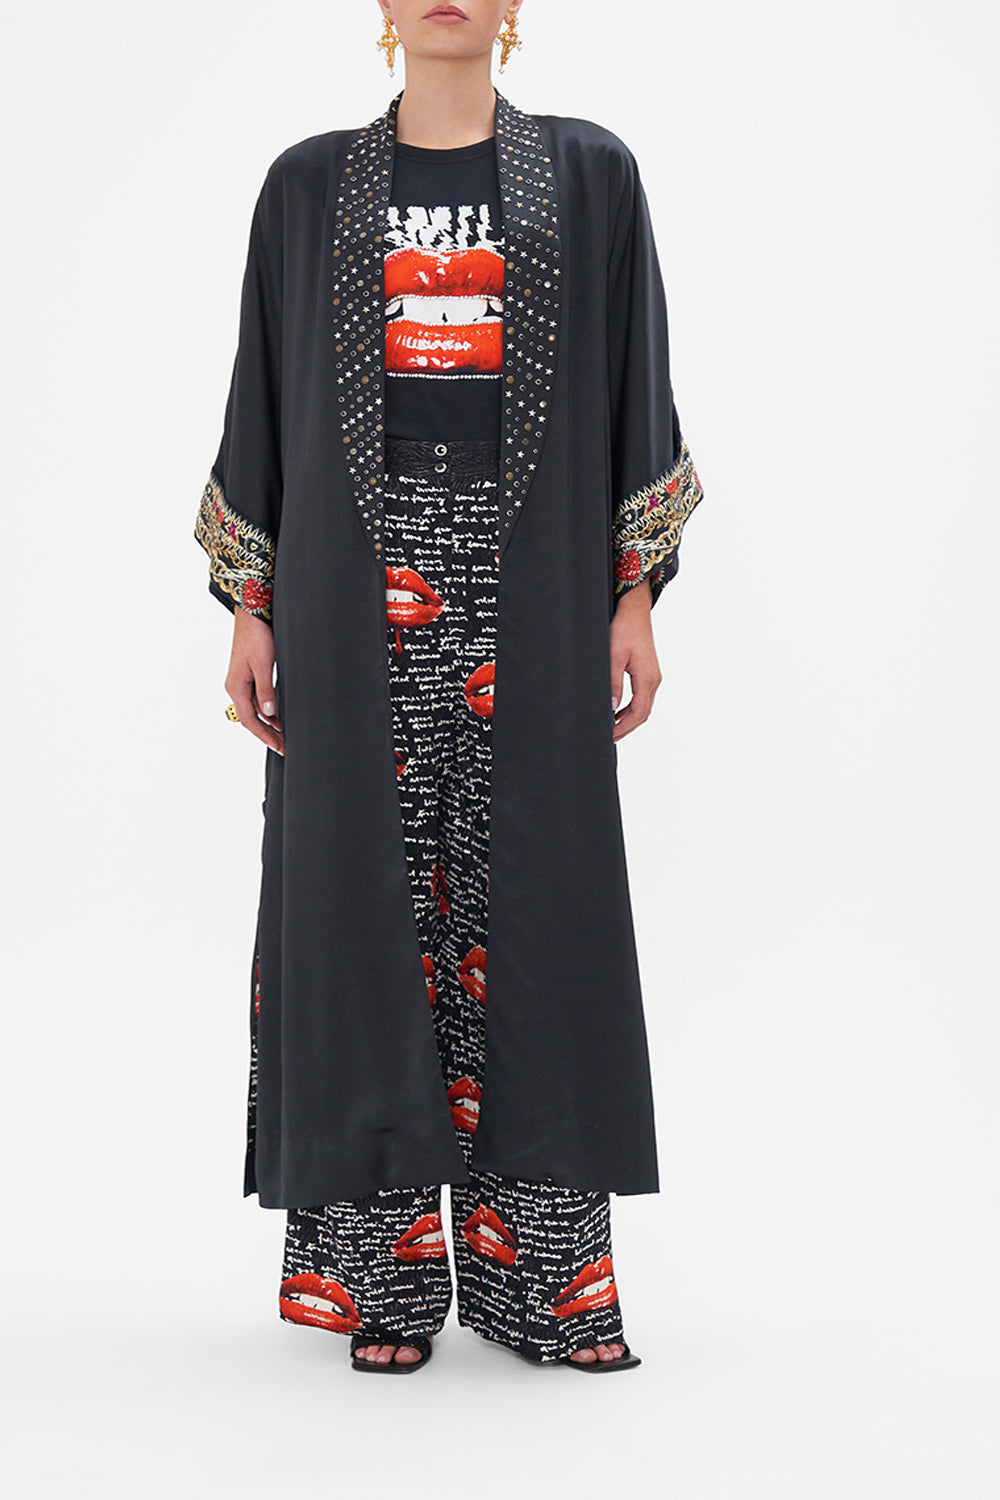 Front view of model wearing CAMILLA black silk robe in Radical Rebirth print